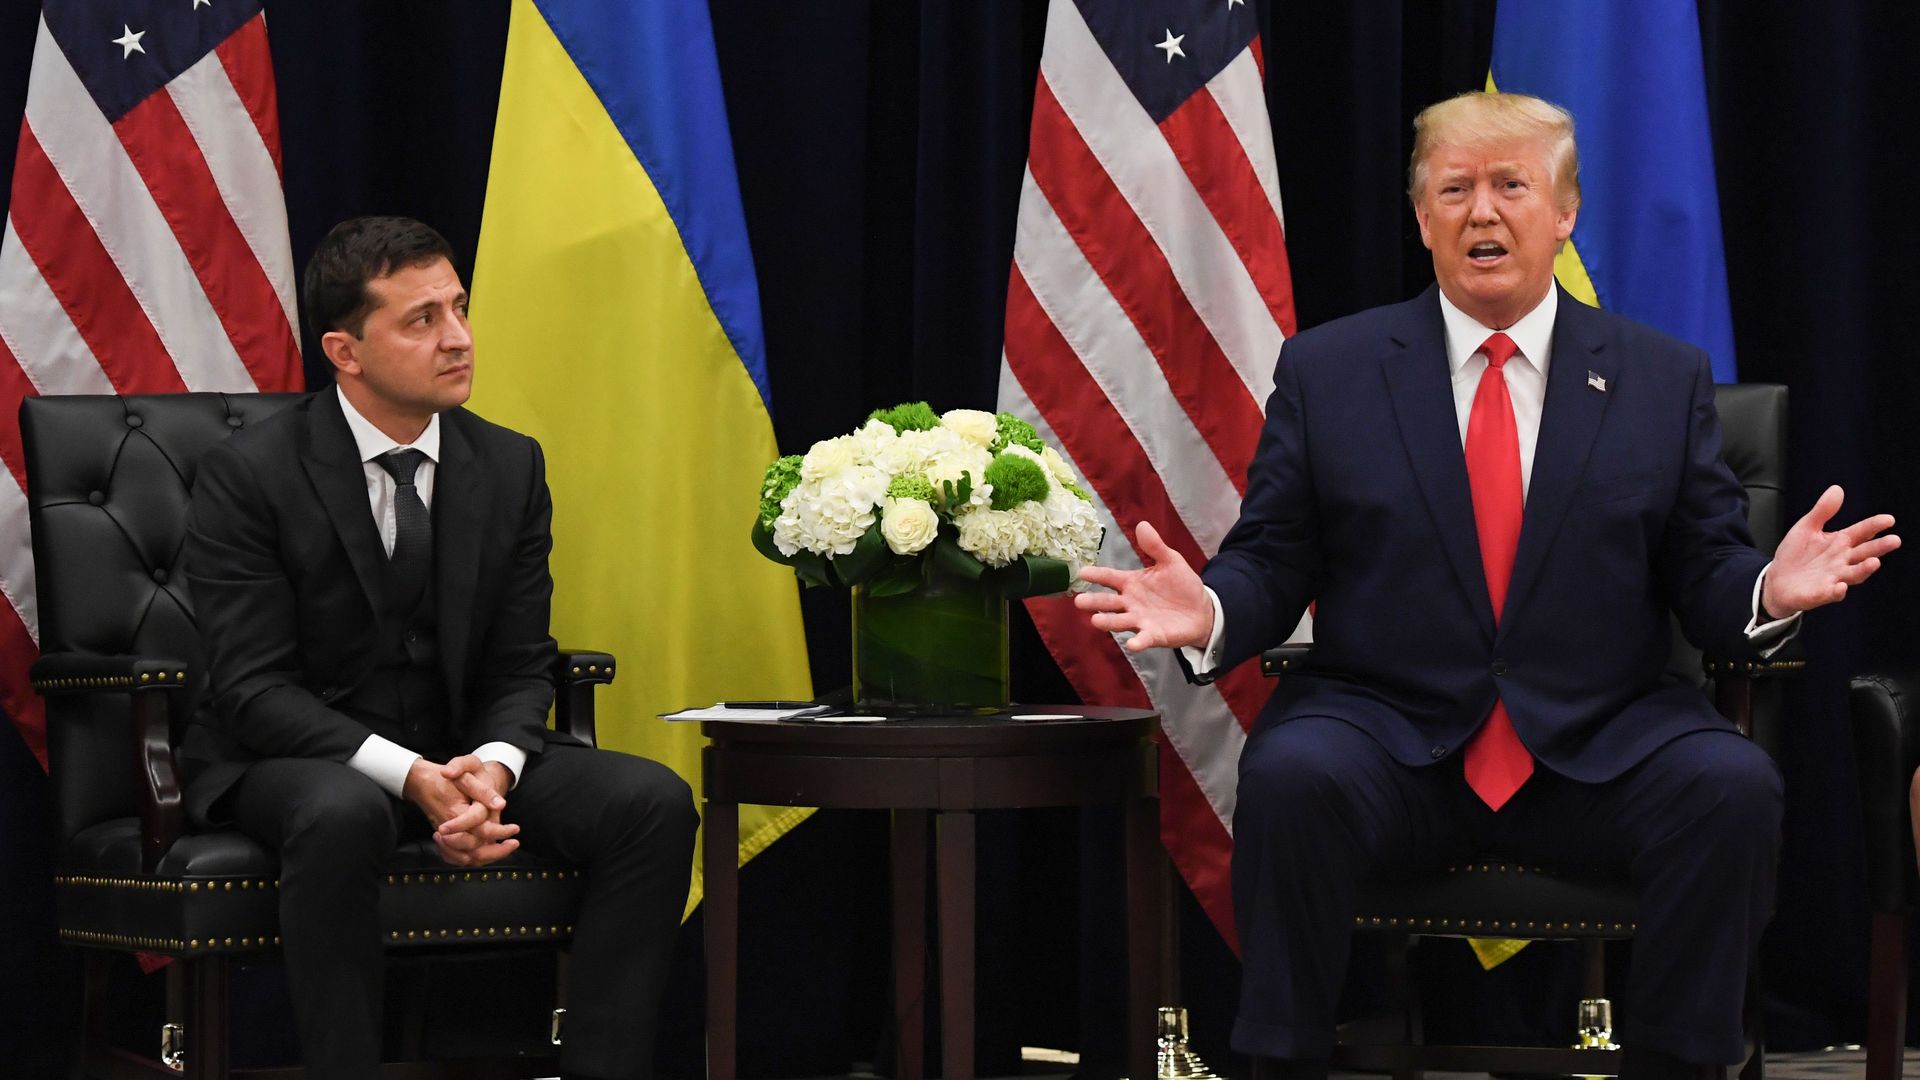  President Donald Trump speaks as Ukrainian President Volodymyr Zelensky looks on during a meeting